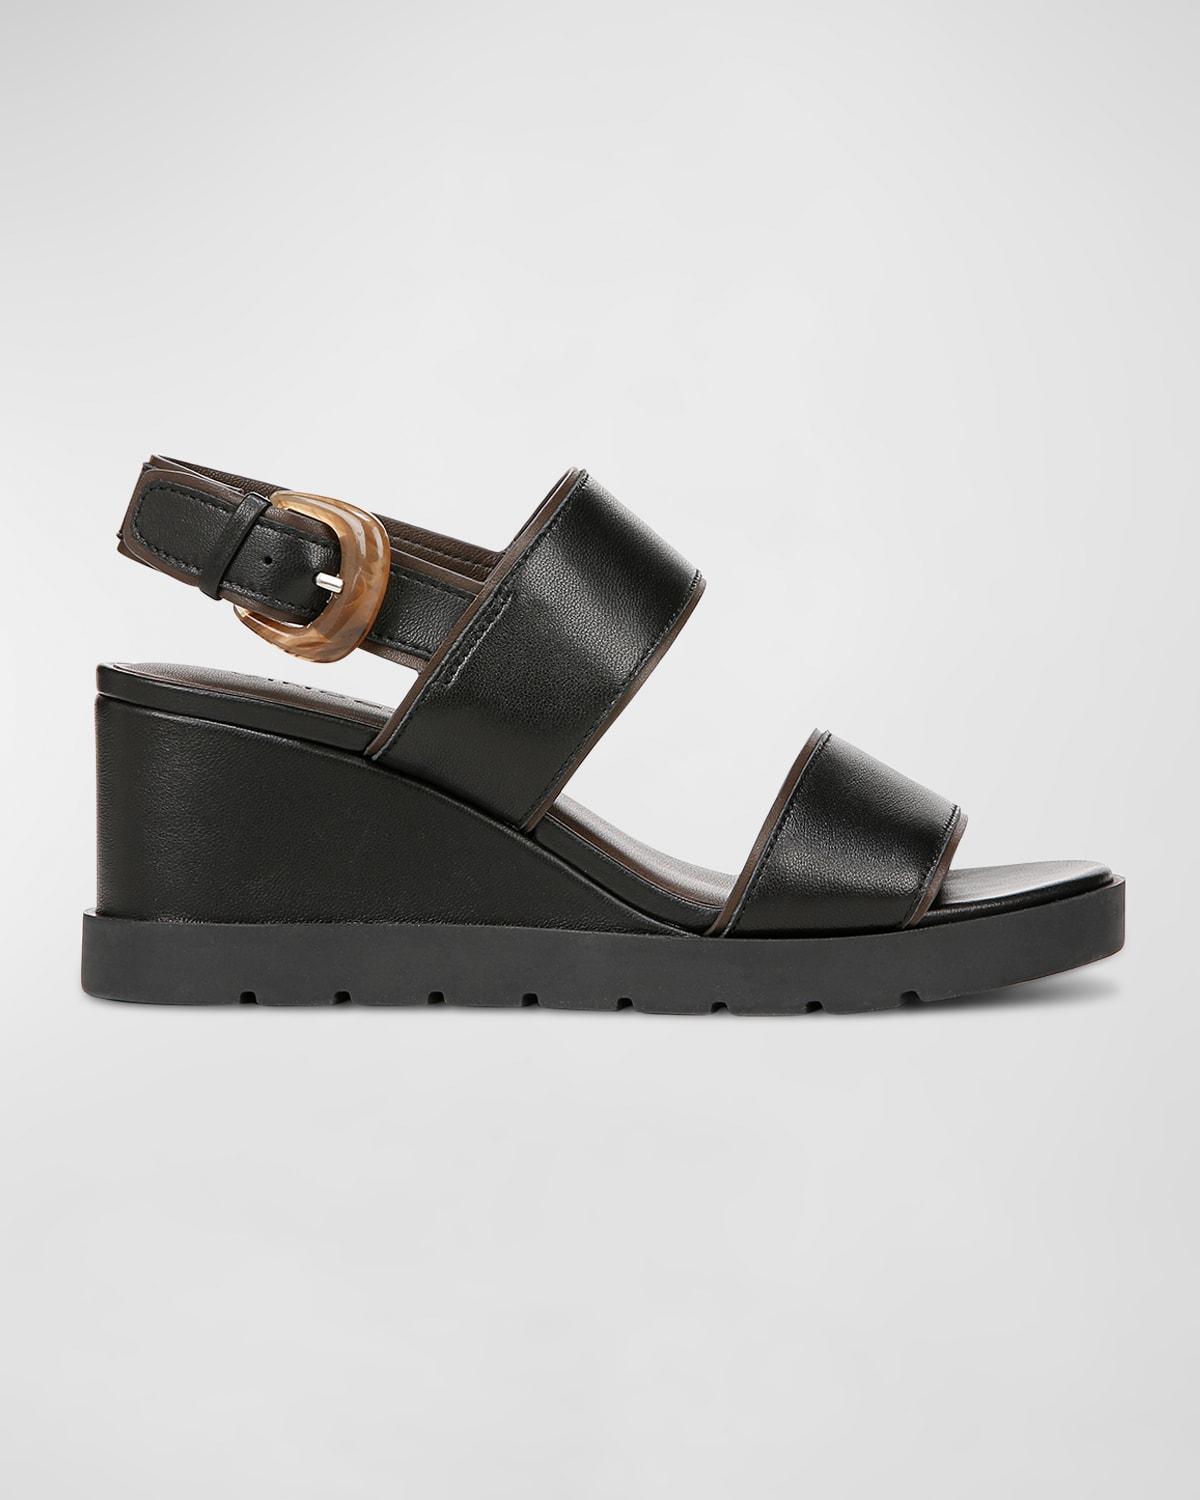 Roma Leather Wedge Slingback Sandals Product Image